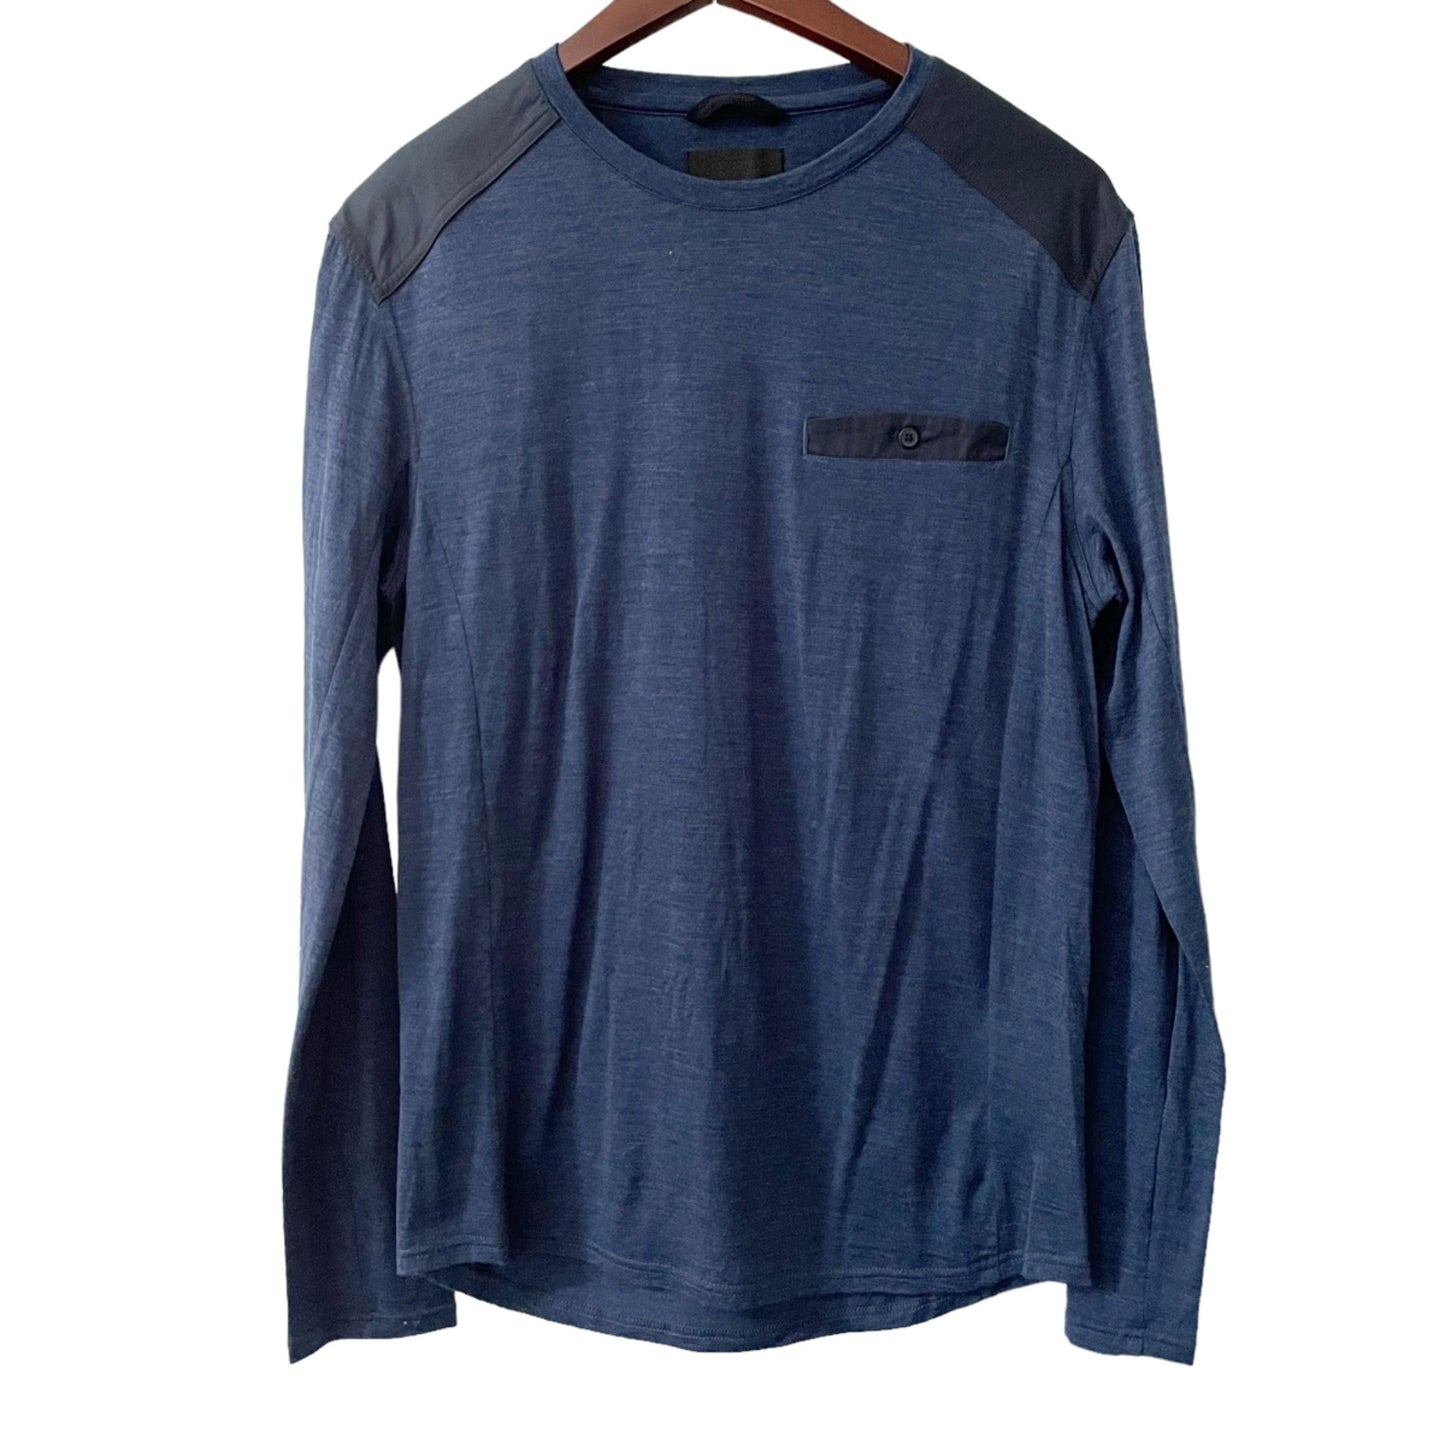 Alchemy Equipment Blue 100% Merino Wool Long Sleeve Sweater Men's Size Small